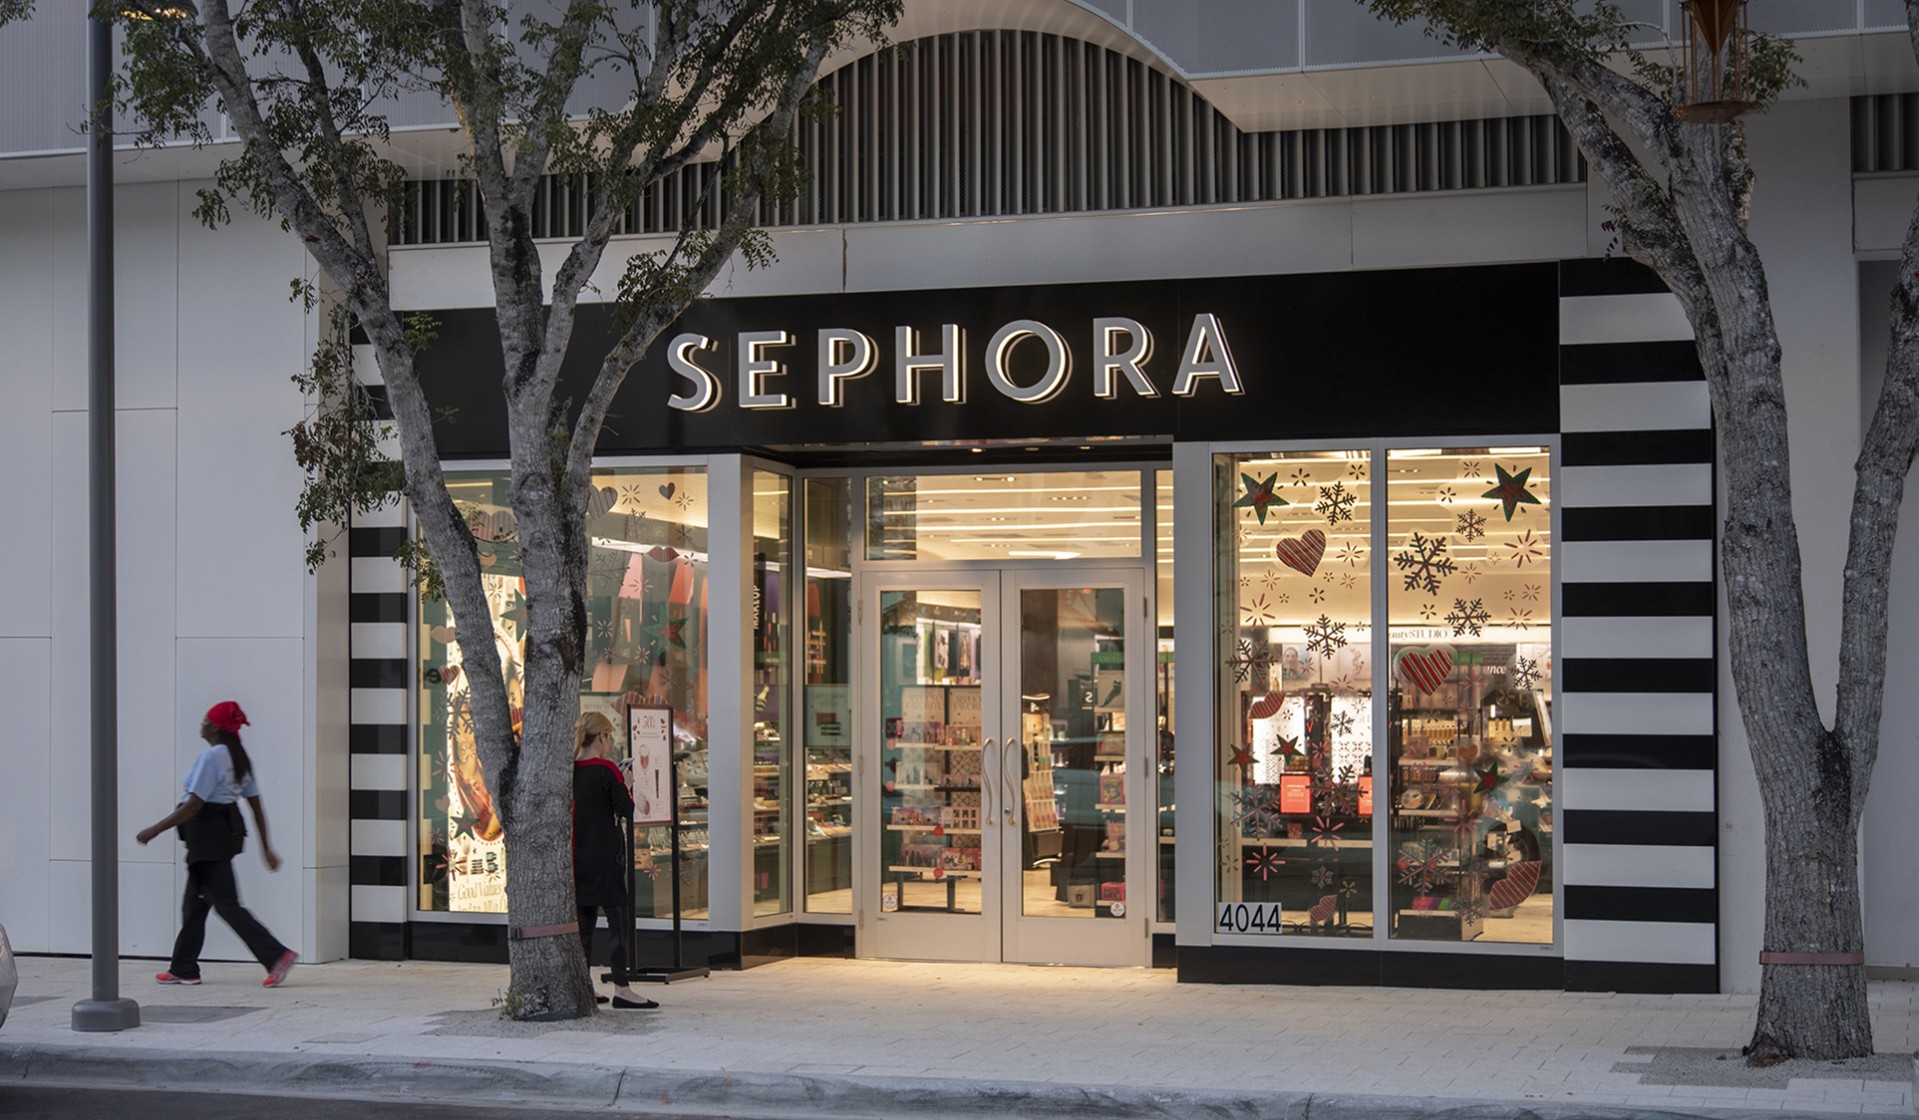 Sephora Store in Midtown Manhattan which originally housed the